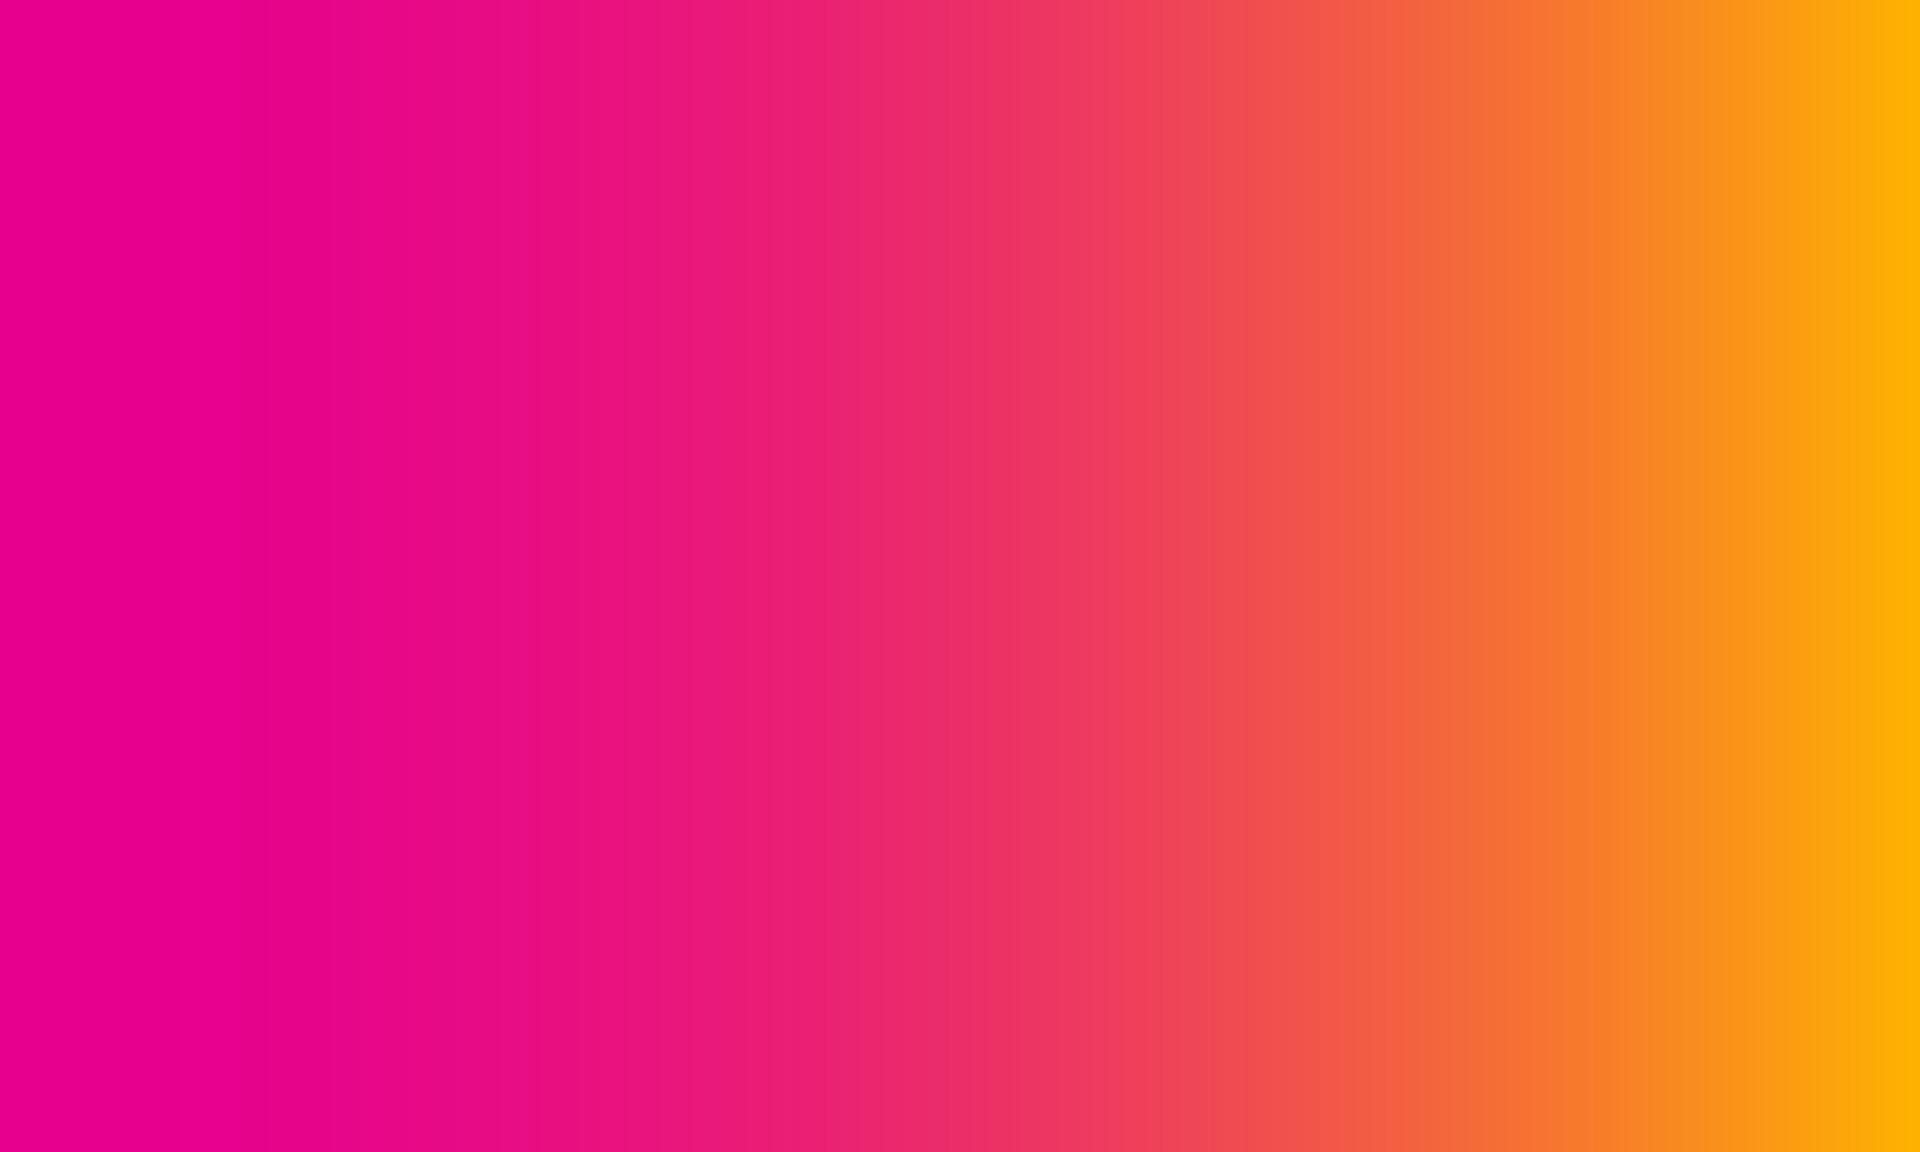 8. Summer Nails: Orange and Pink Gradient Design - wide 4